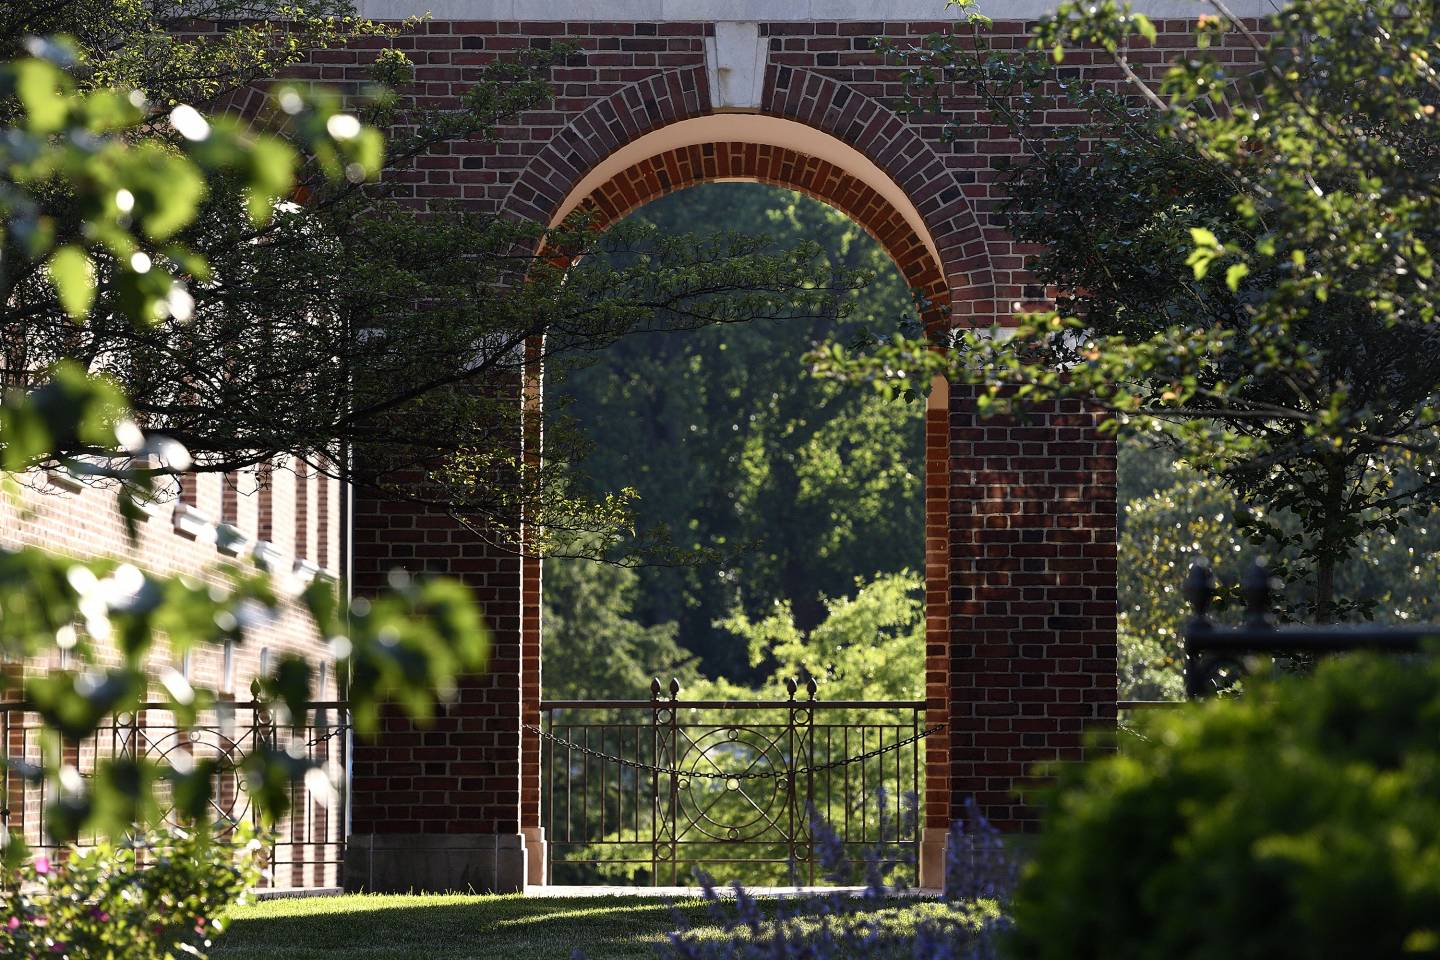 Homewood campus archways in the sunshine